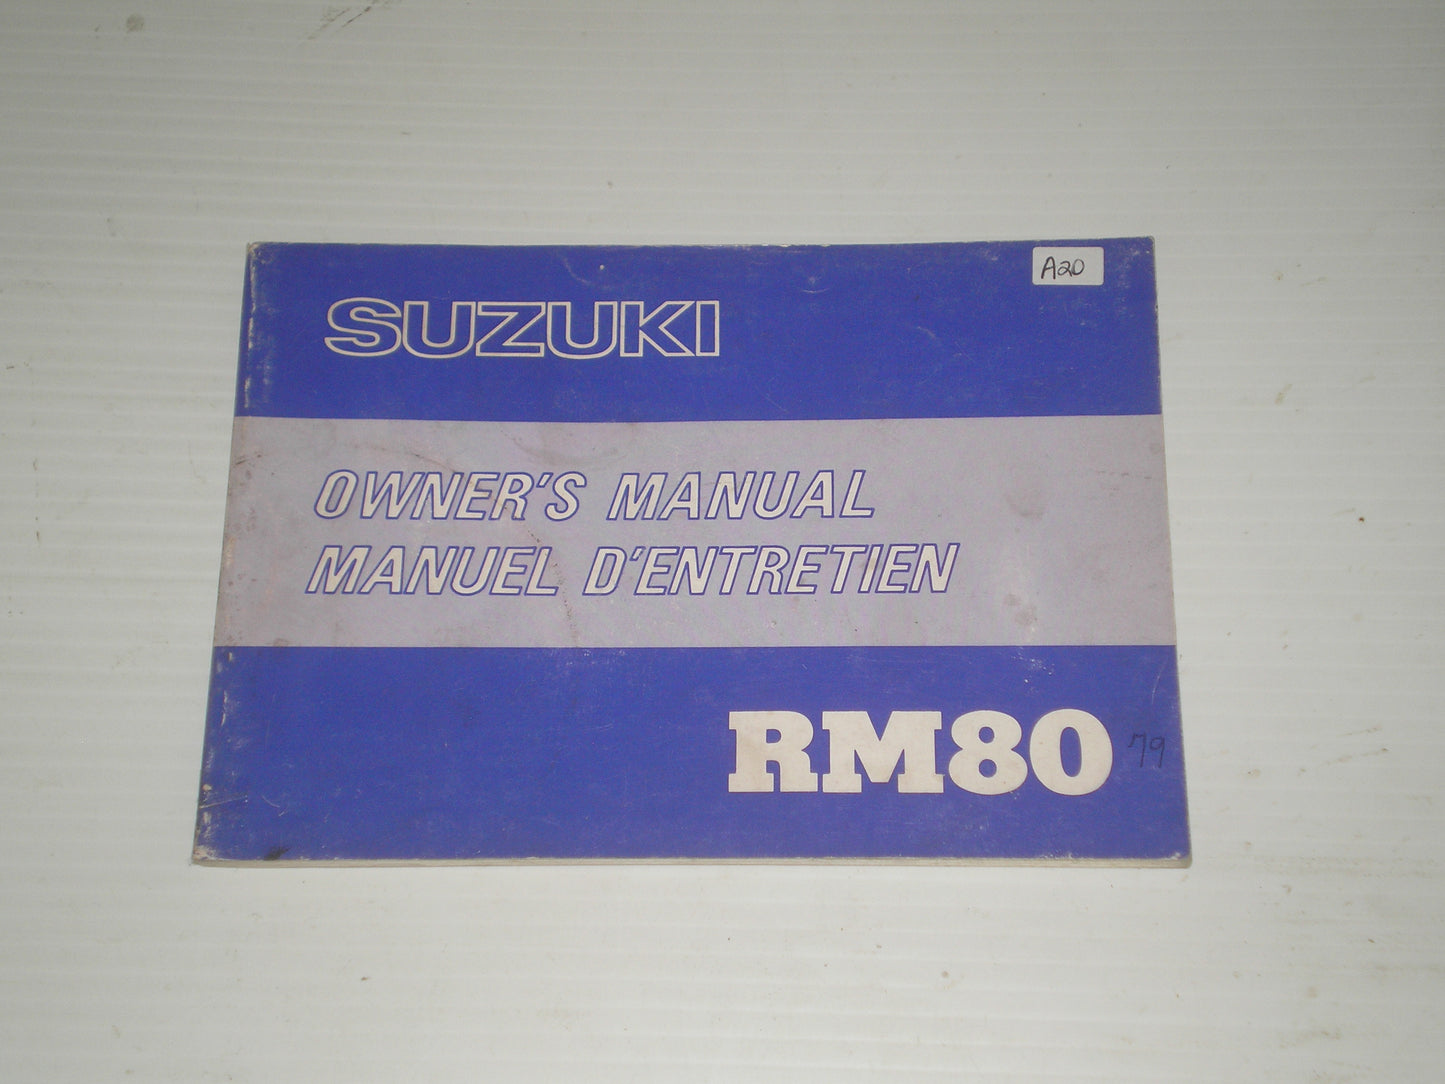 SUZUKI RM80  1979  Owner's  Manual  99011-46920-28B  #A20